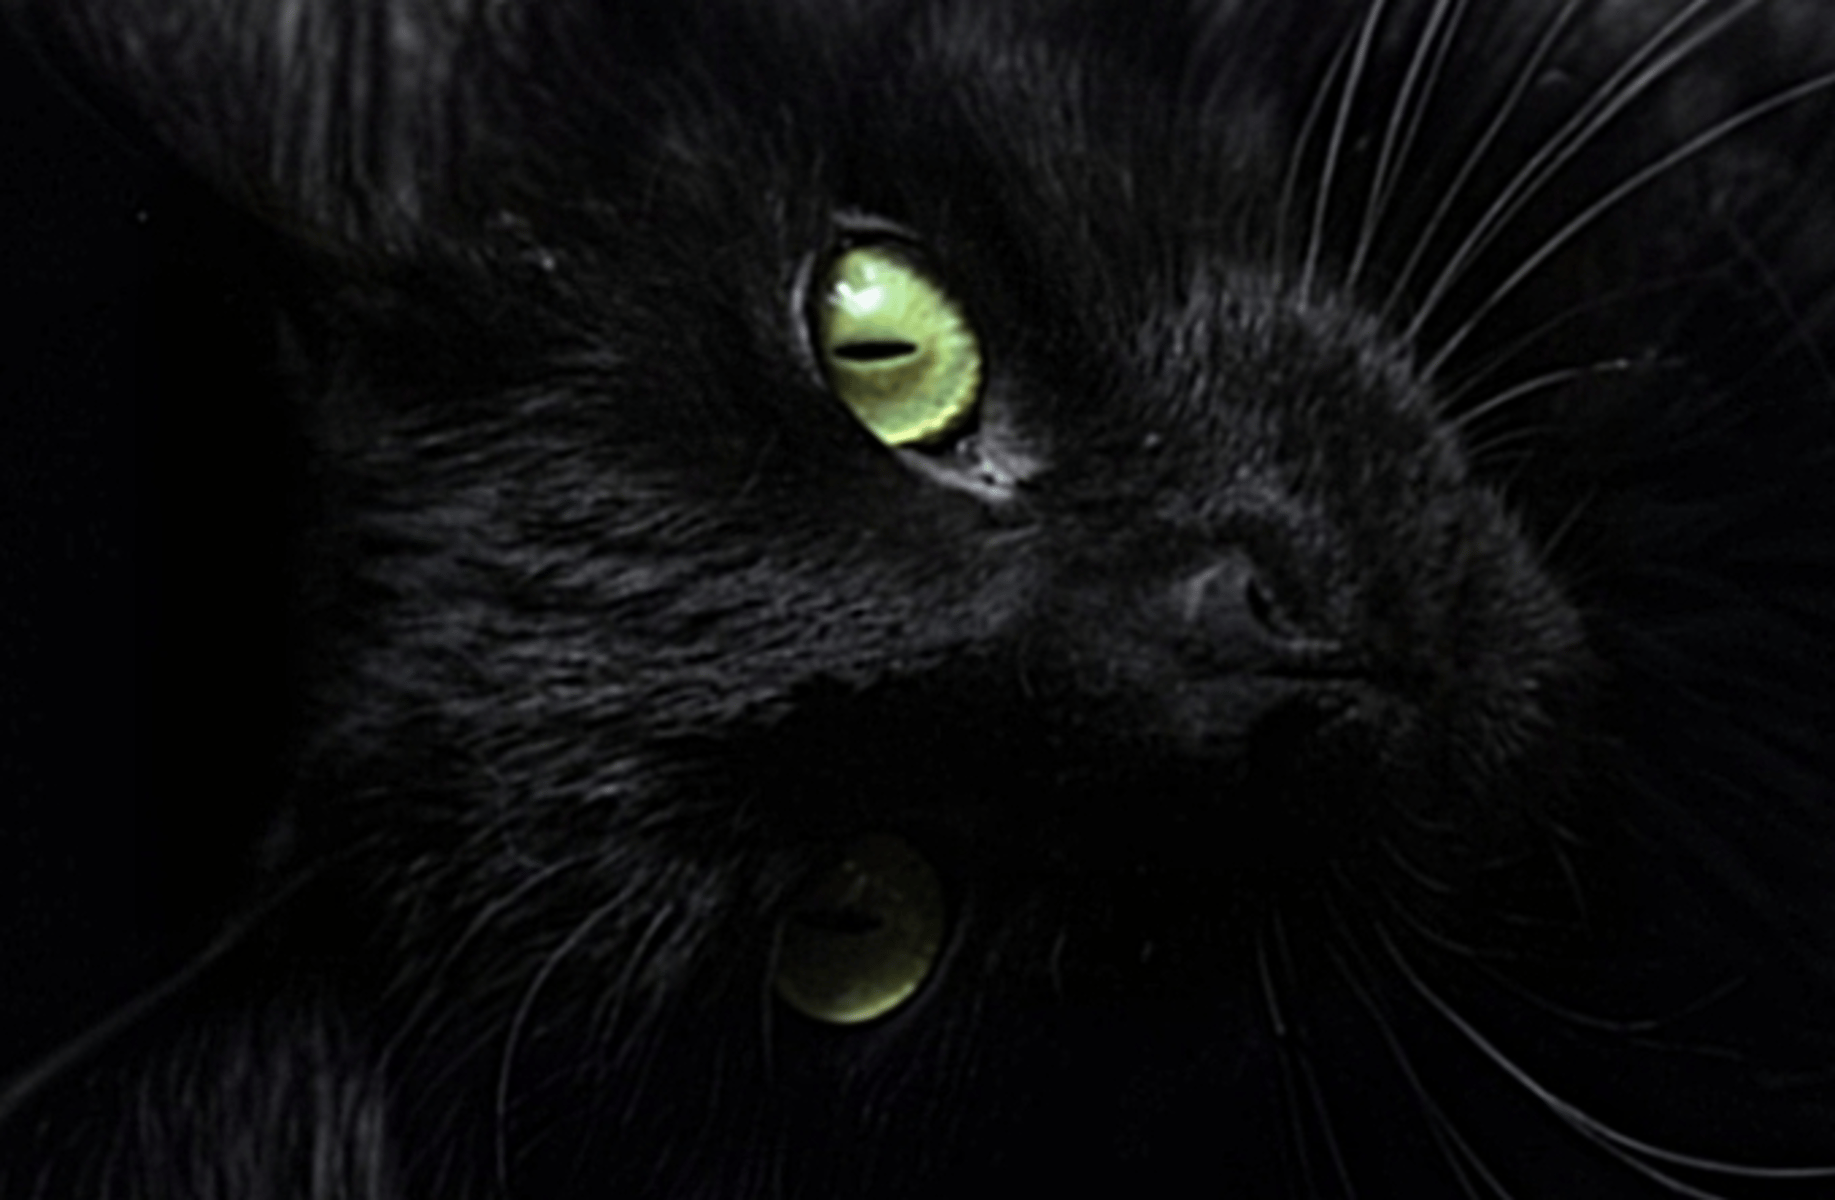 The Talking Black Cat